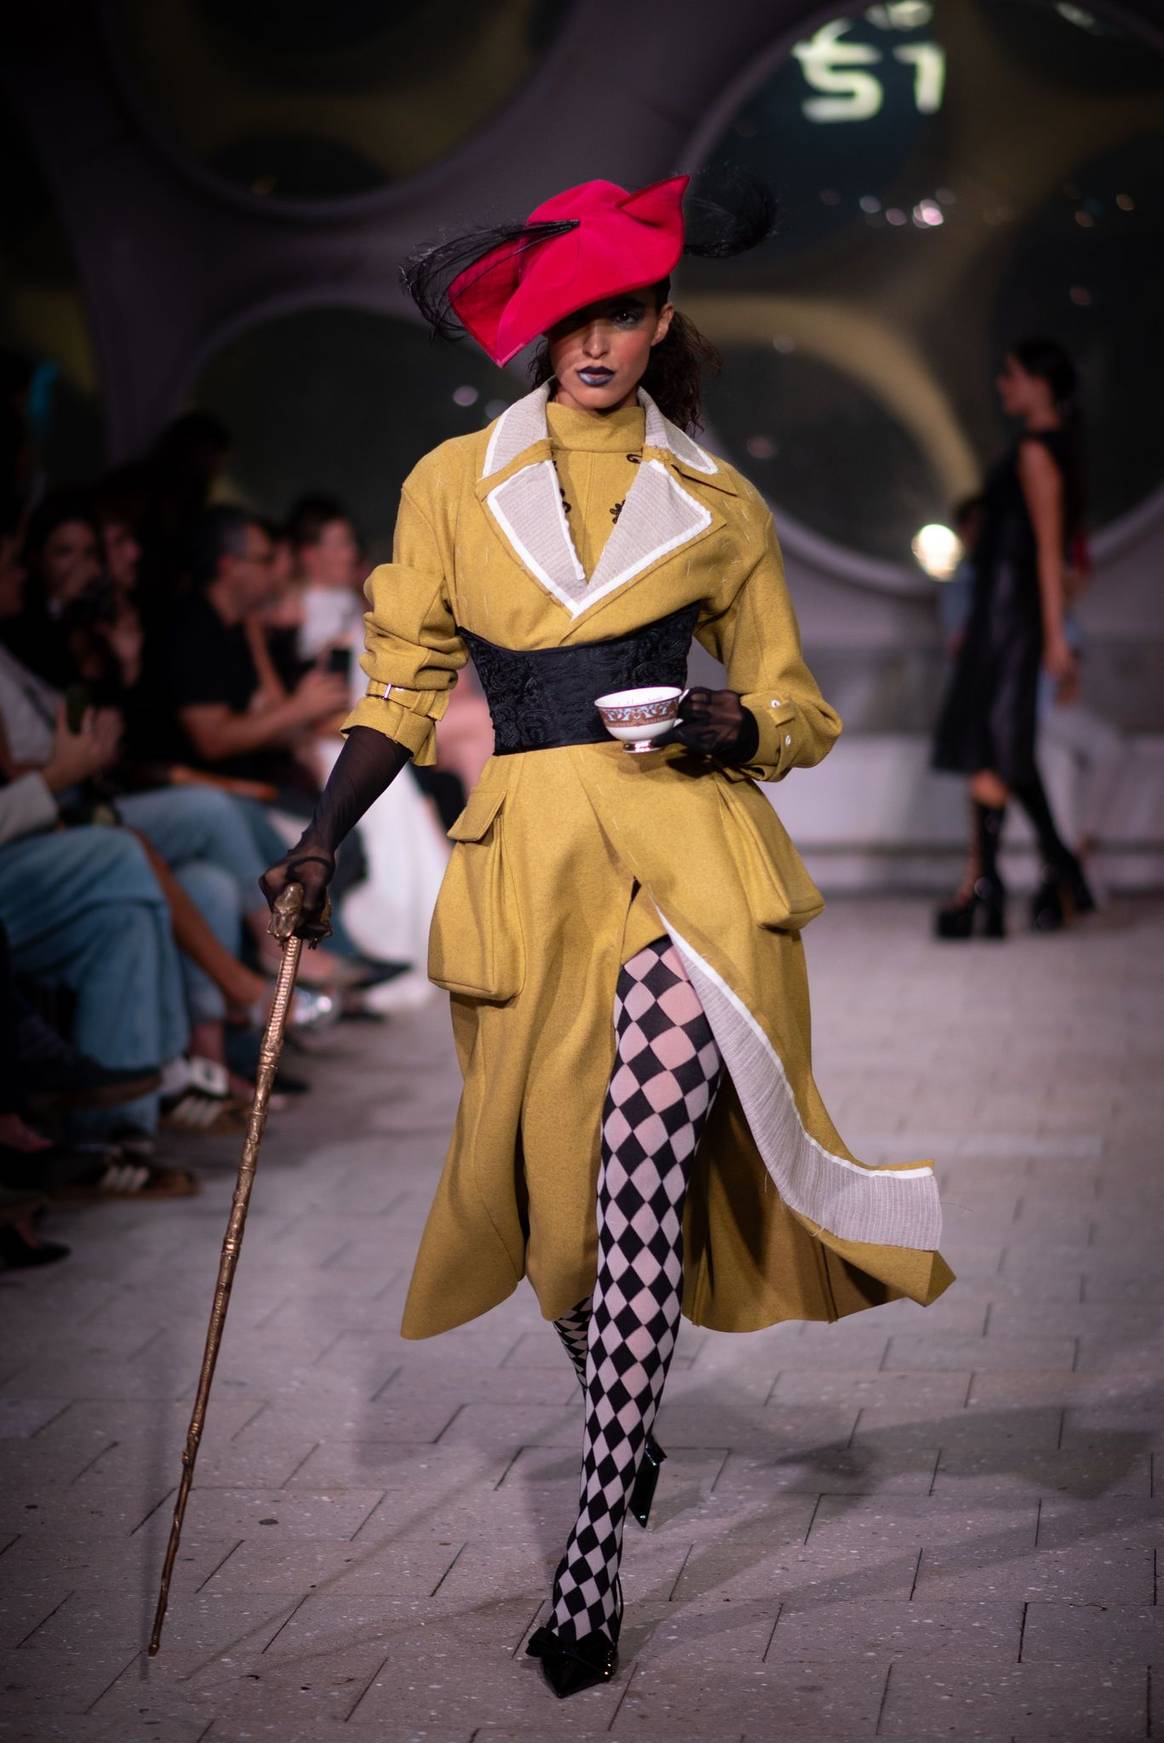 A look by Michael Acierno at the Istituto Marangoni inaugural student fashion show, May 2024.